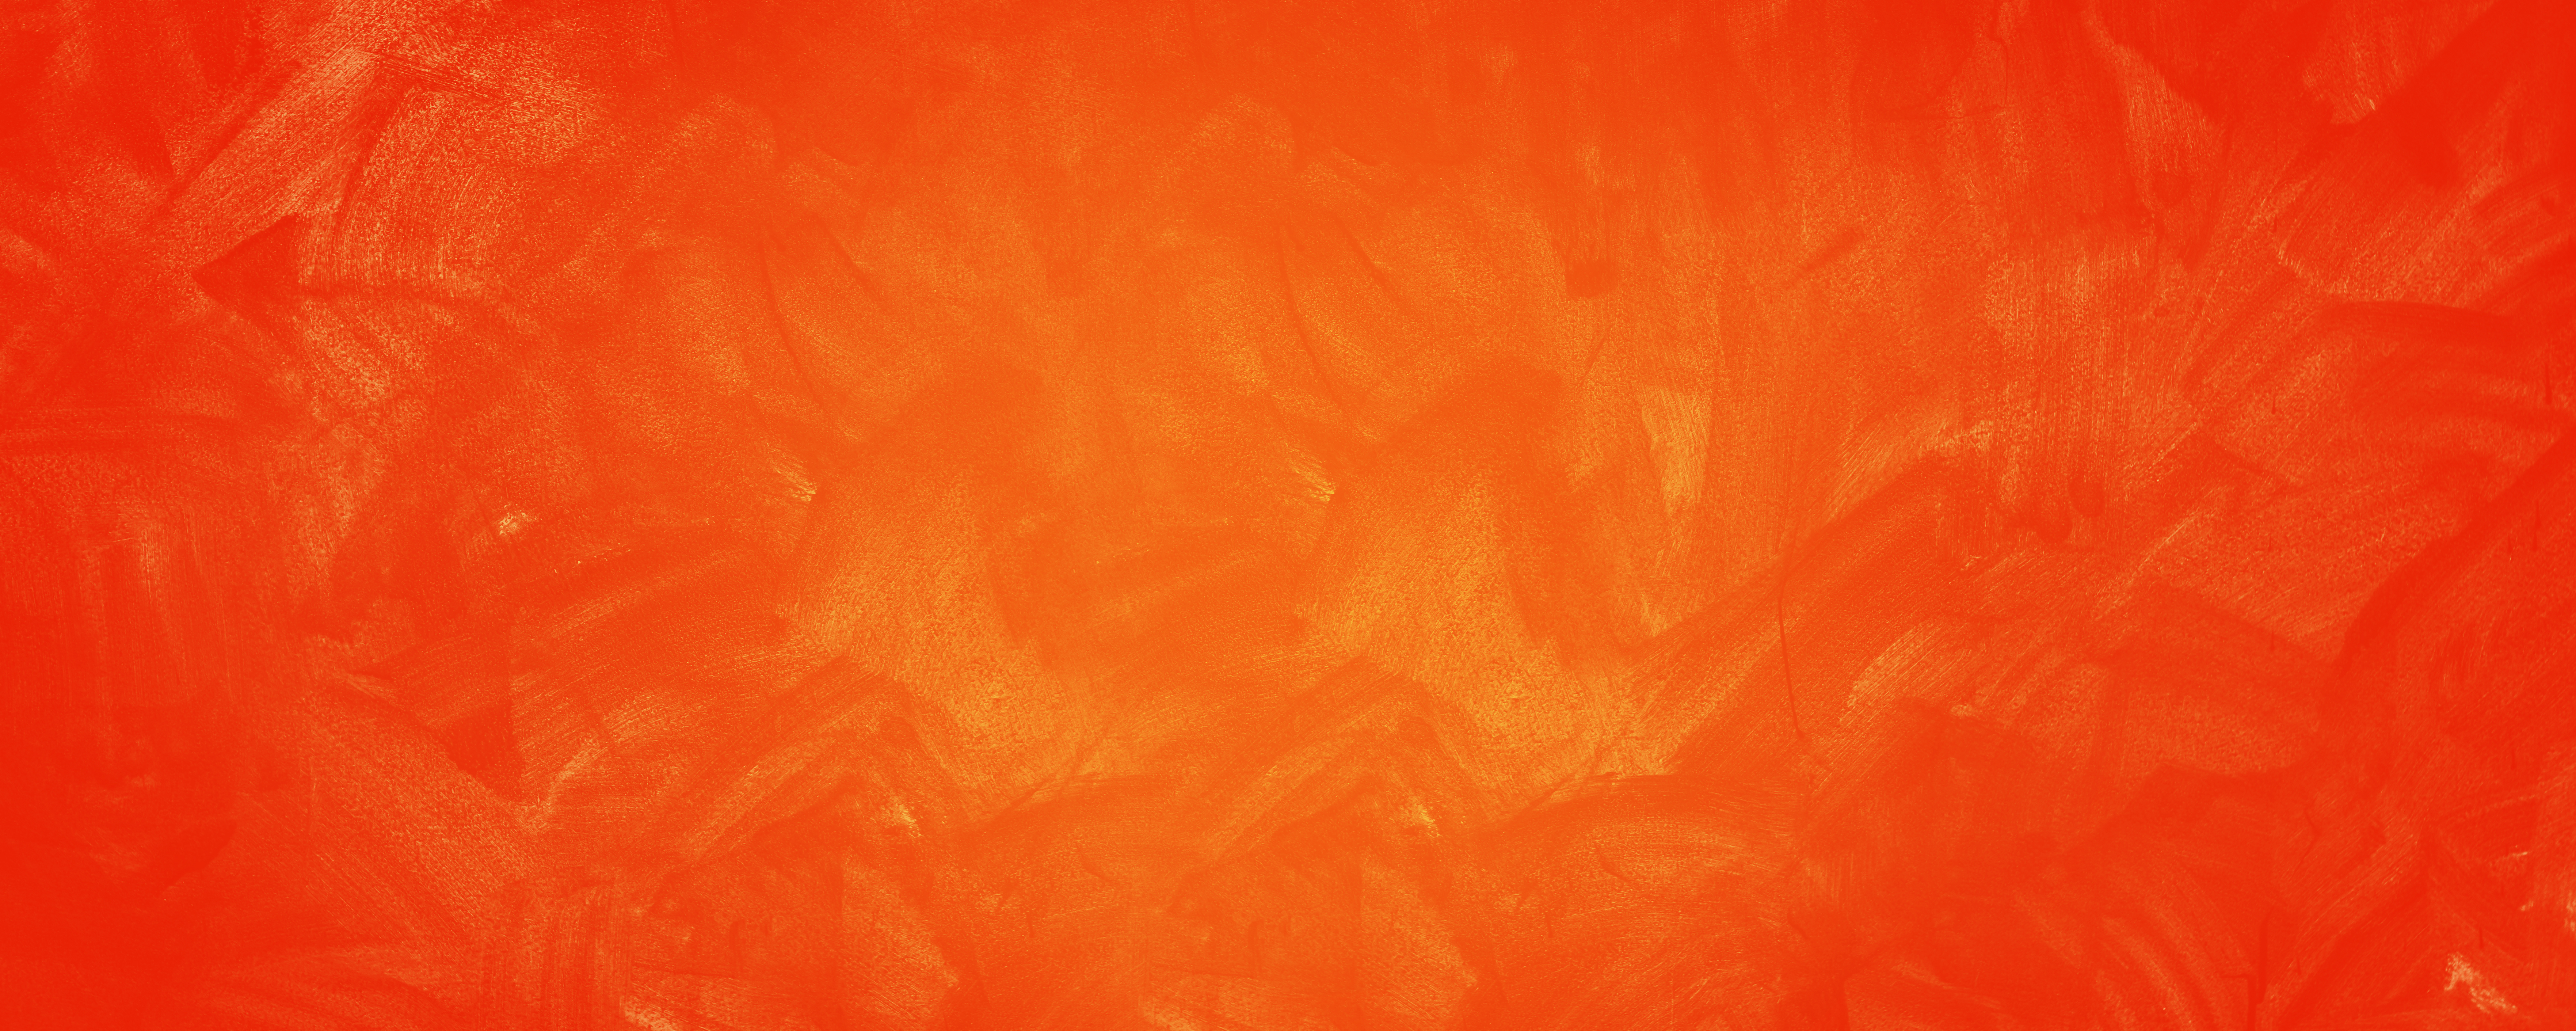 Dark Orange Room Banner Cement and Concrete Wall Background